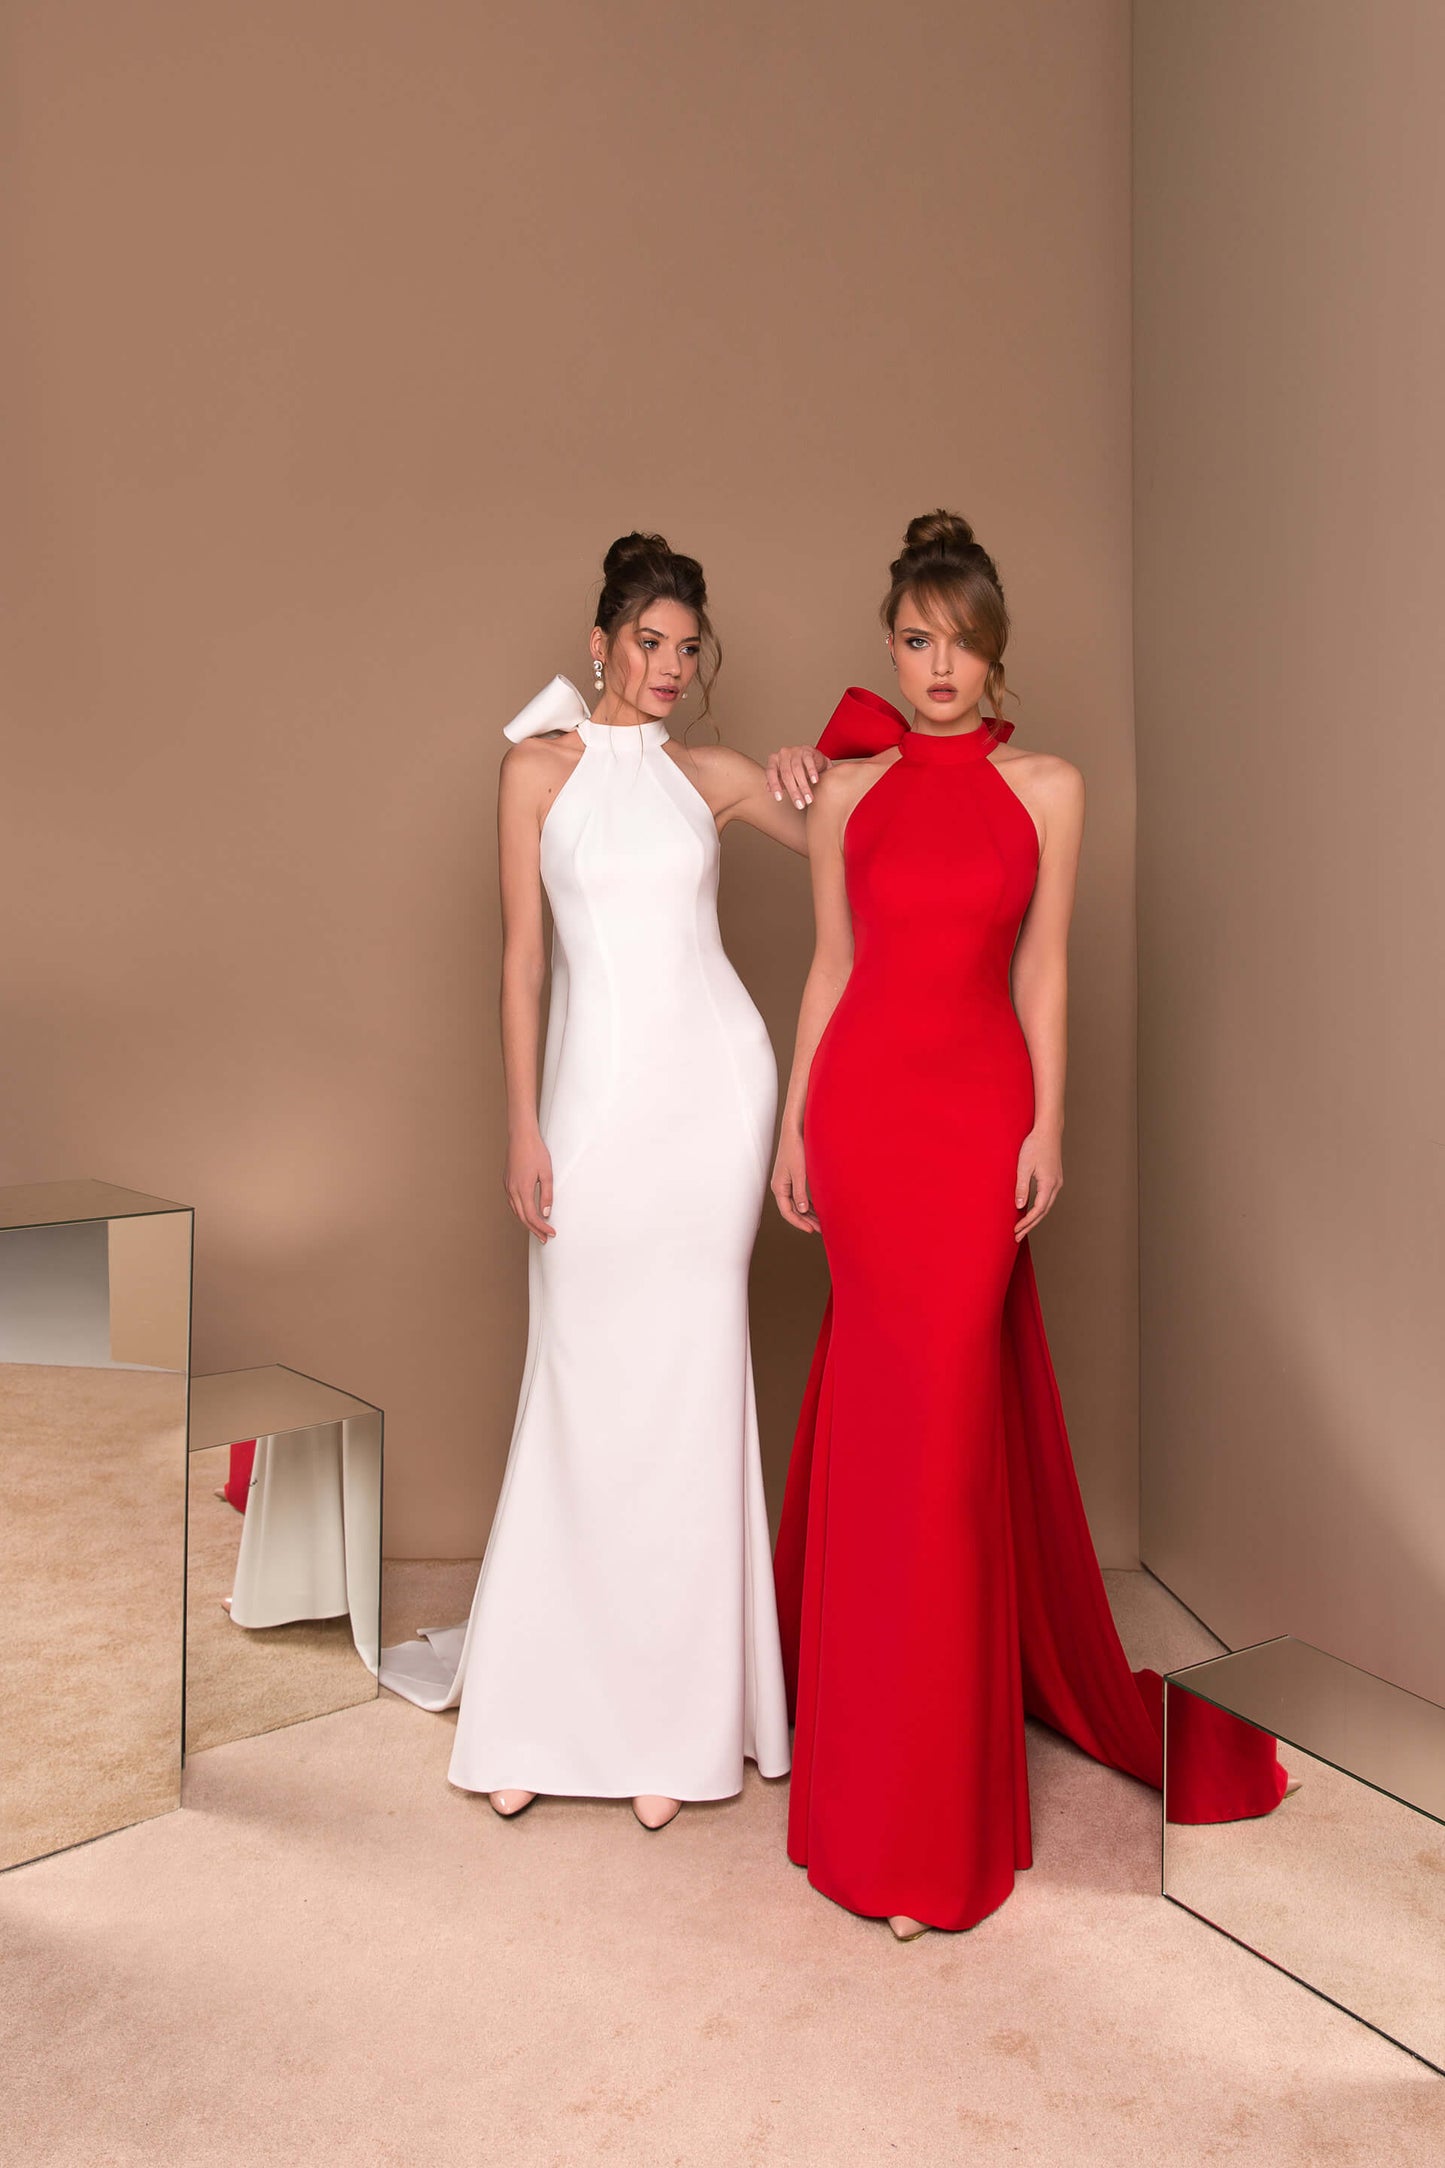 Olyamak Valery Dress on Models- Full View - Rofial Beauty